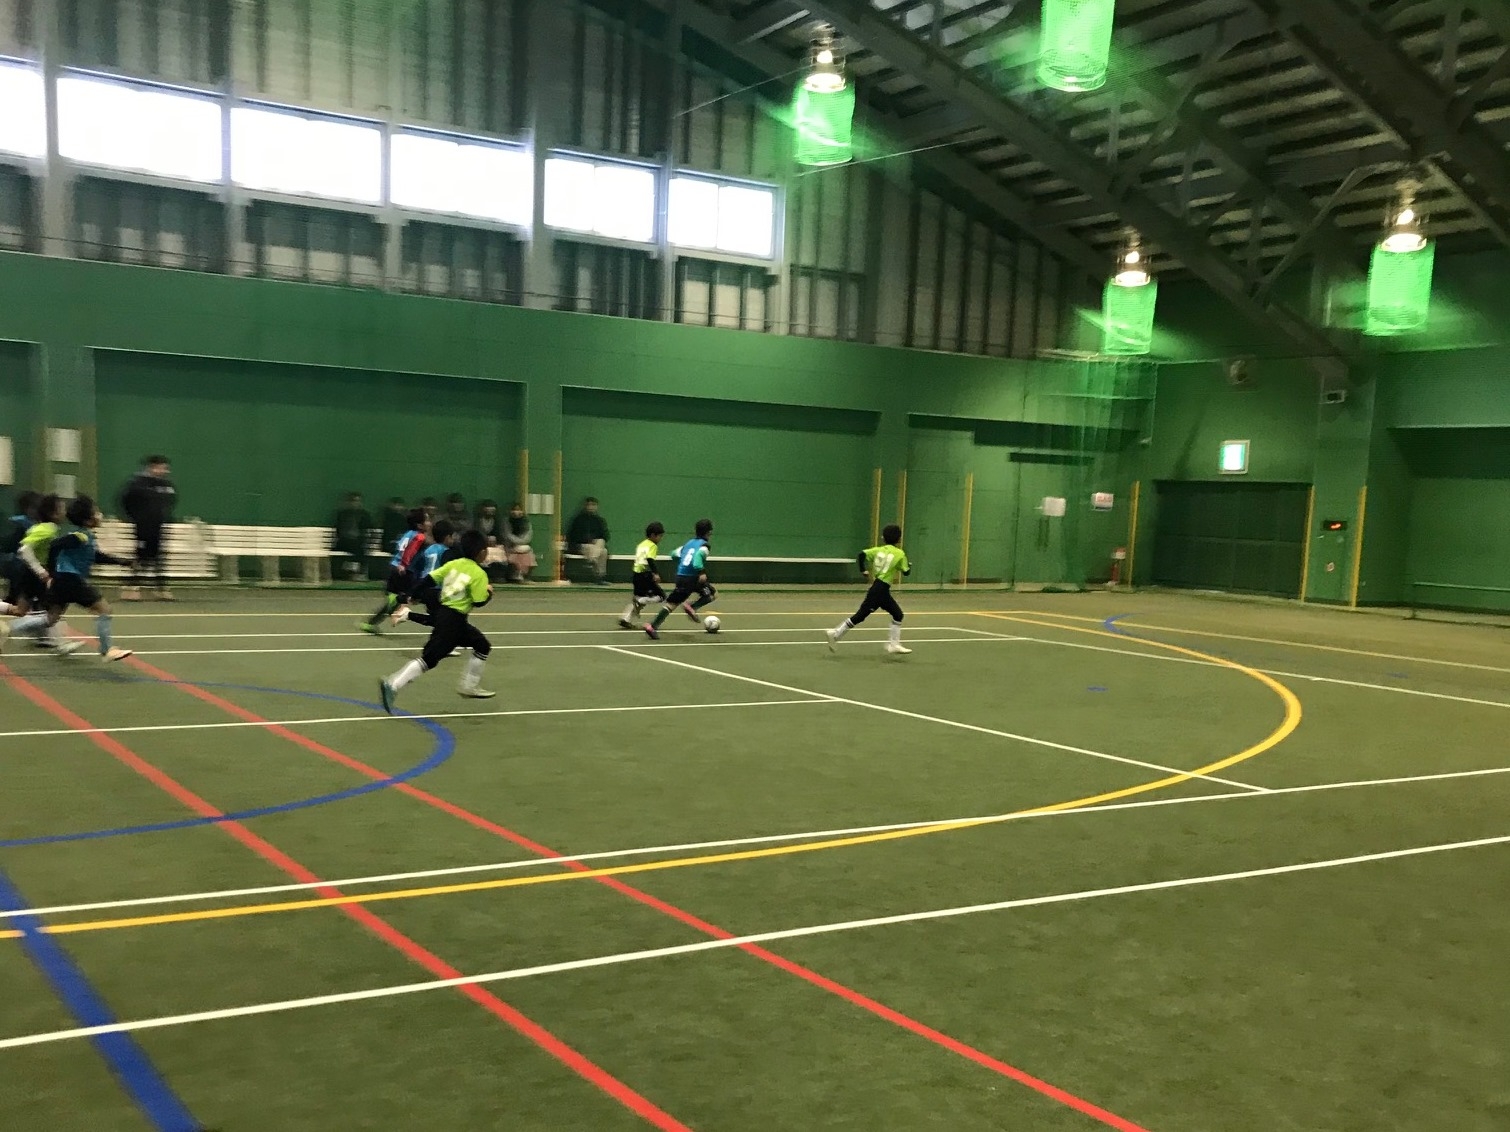 JFAキッズサッカーフェスティバル in 新潟市城山運動公園体育施設